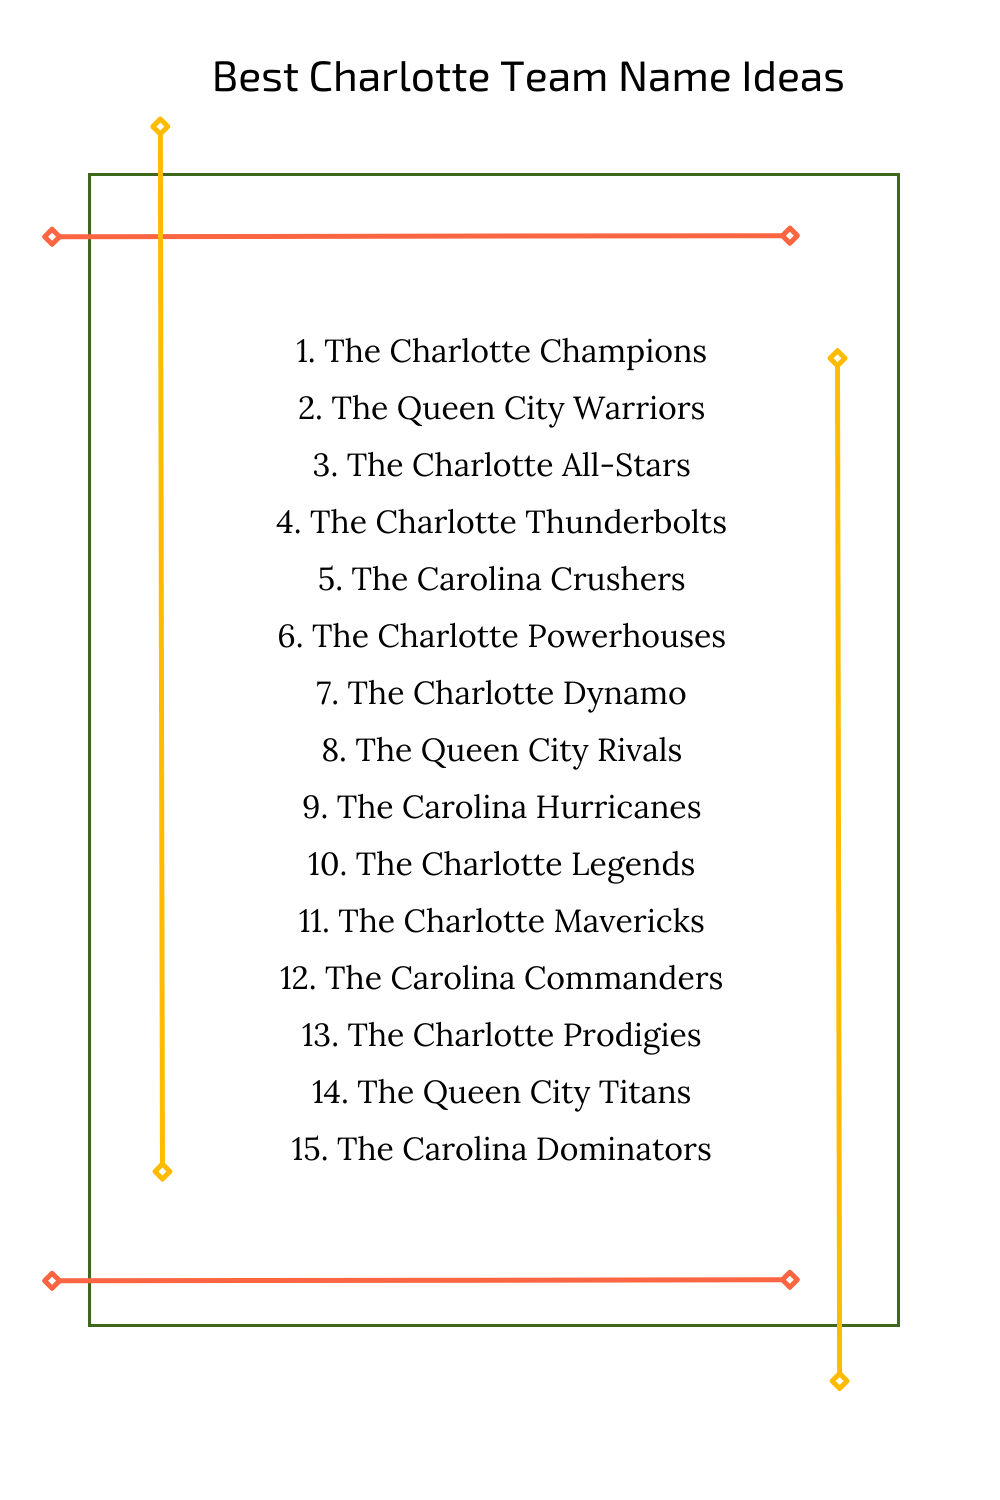 Best Charlotte Team Name Ideas